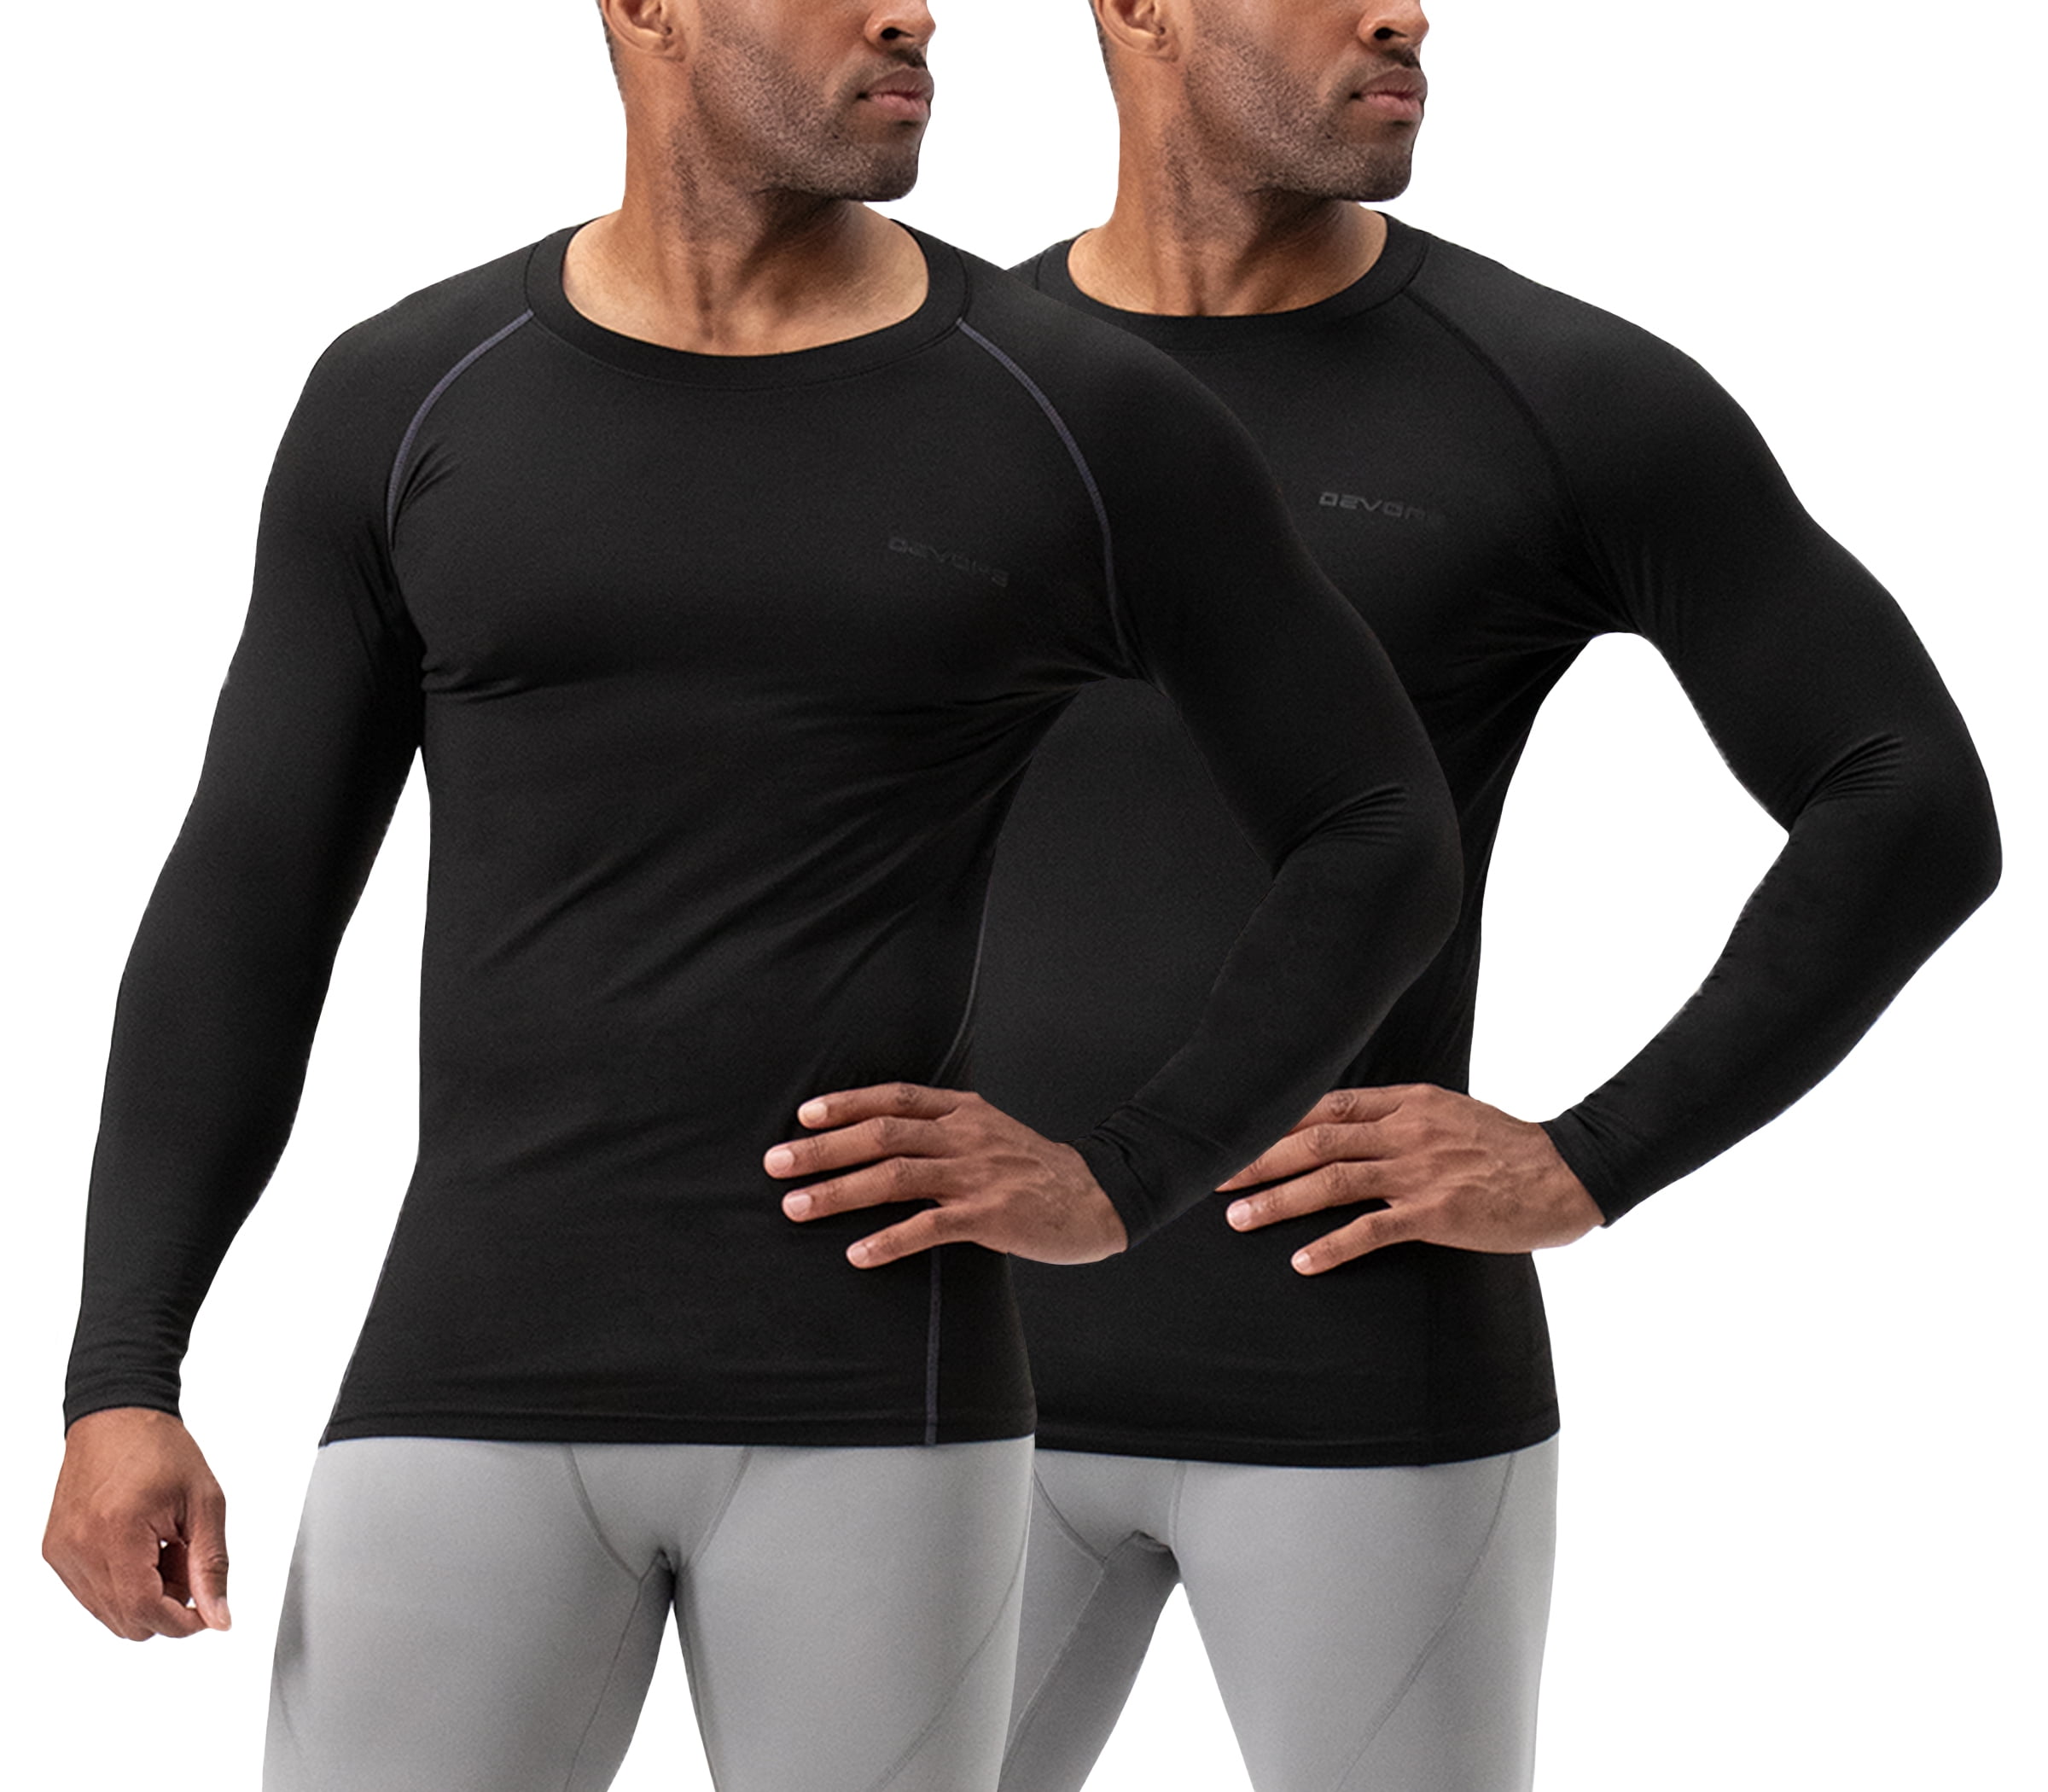 DEVOPS 2 Pack Men's Thermal long sleeve compression shirts (2X-Large ...